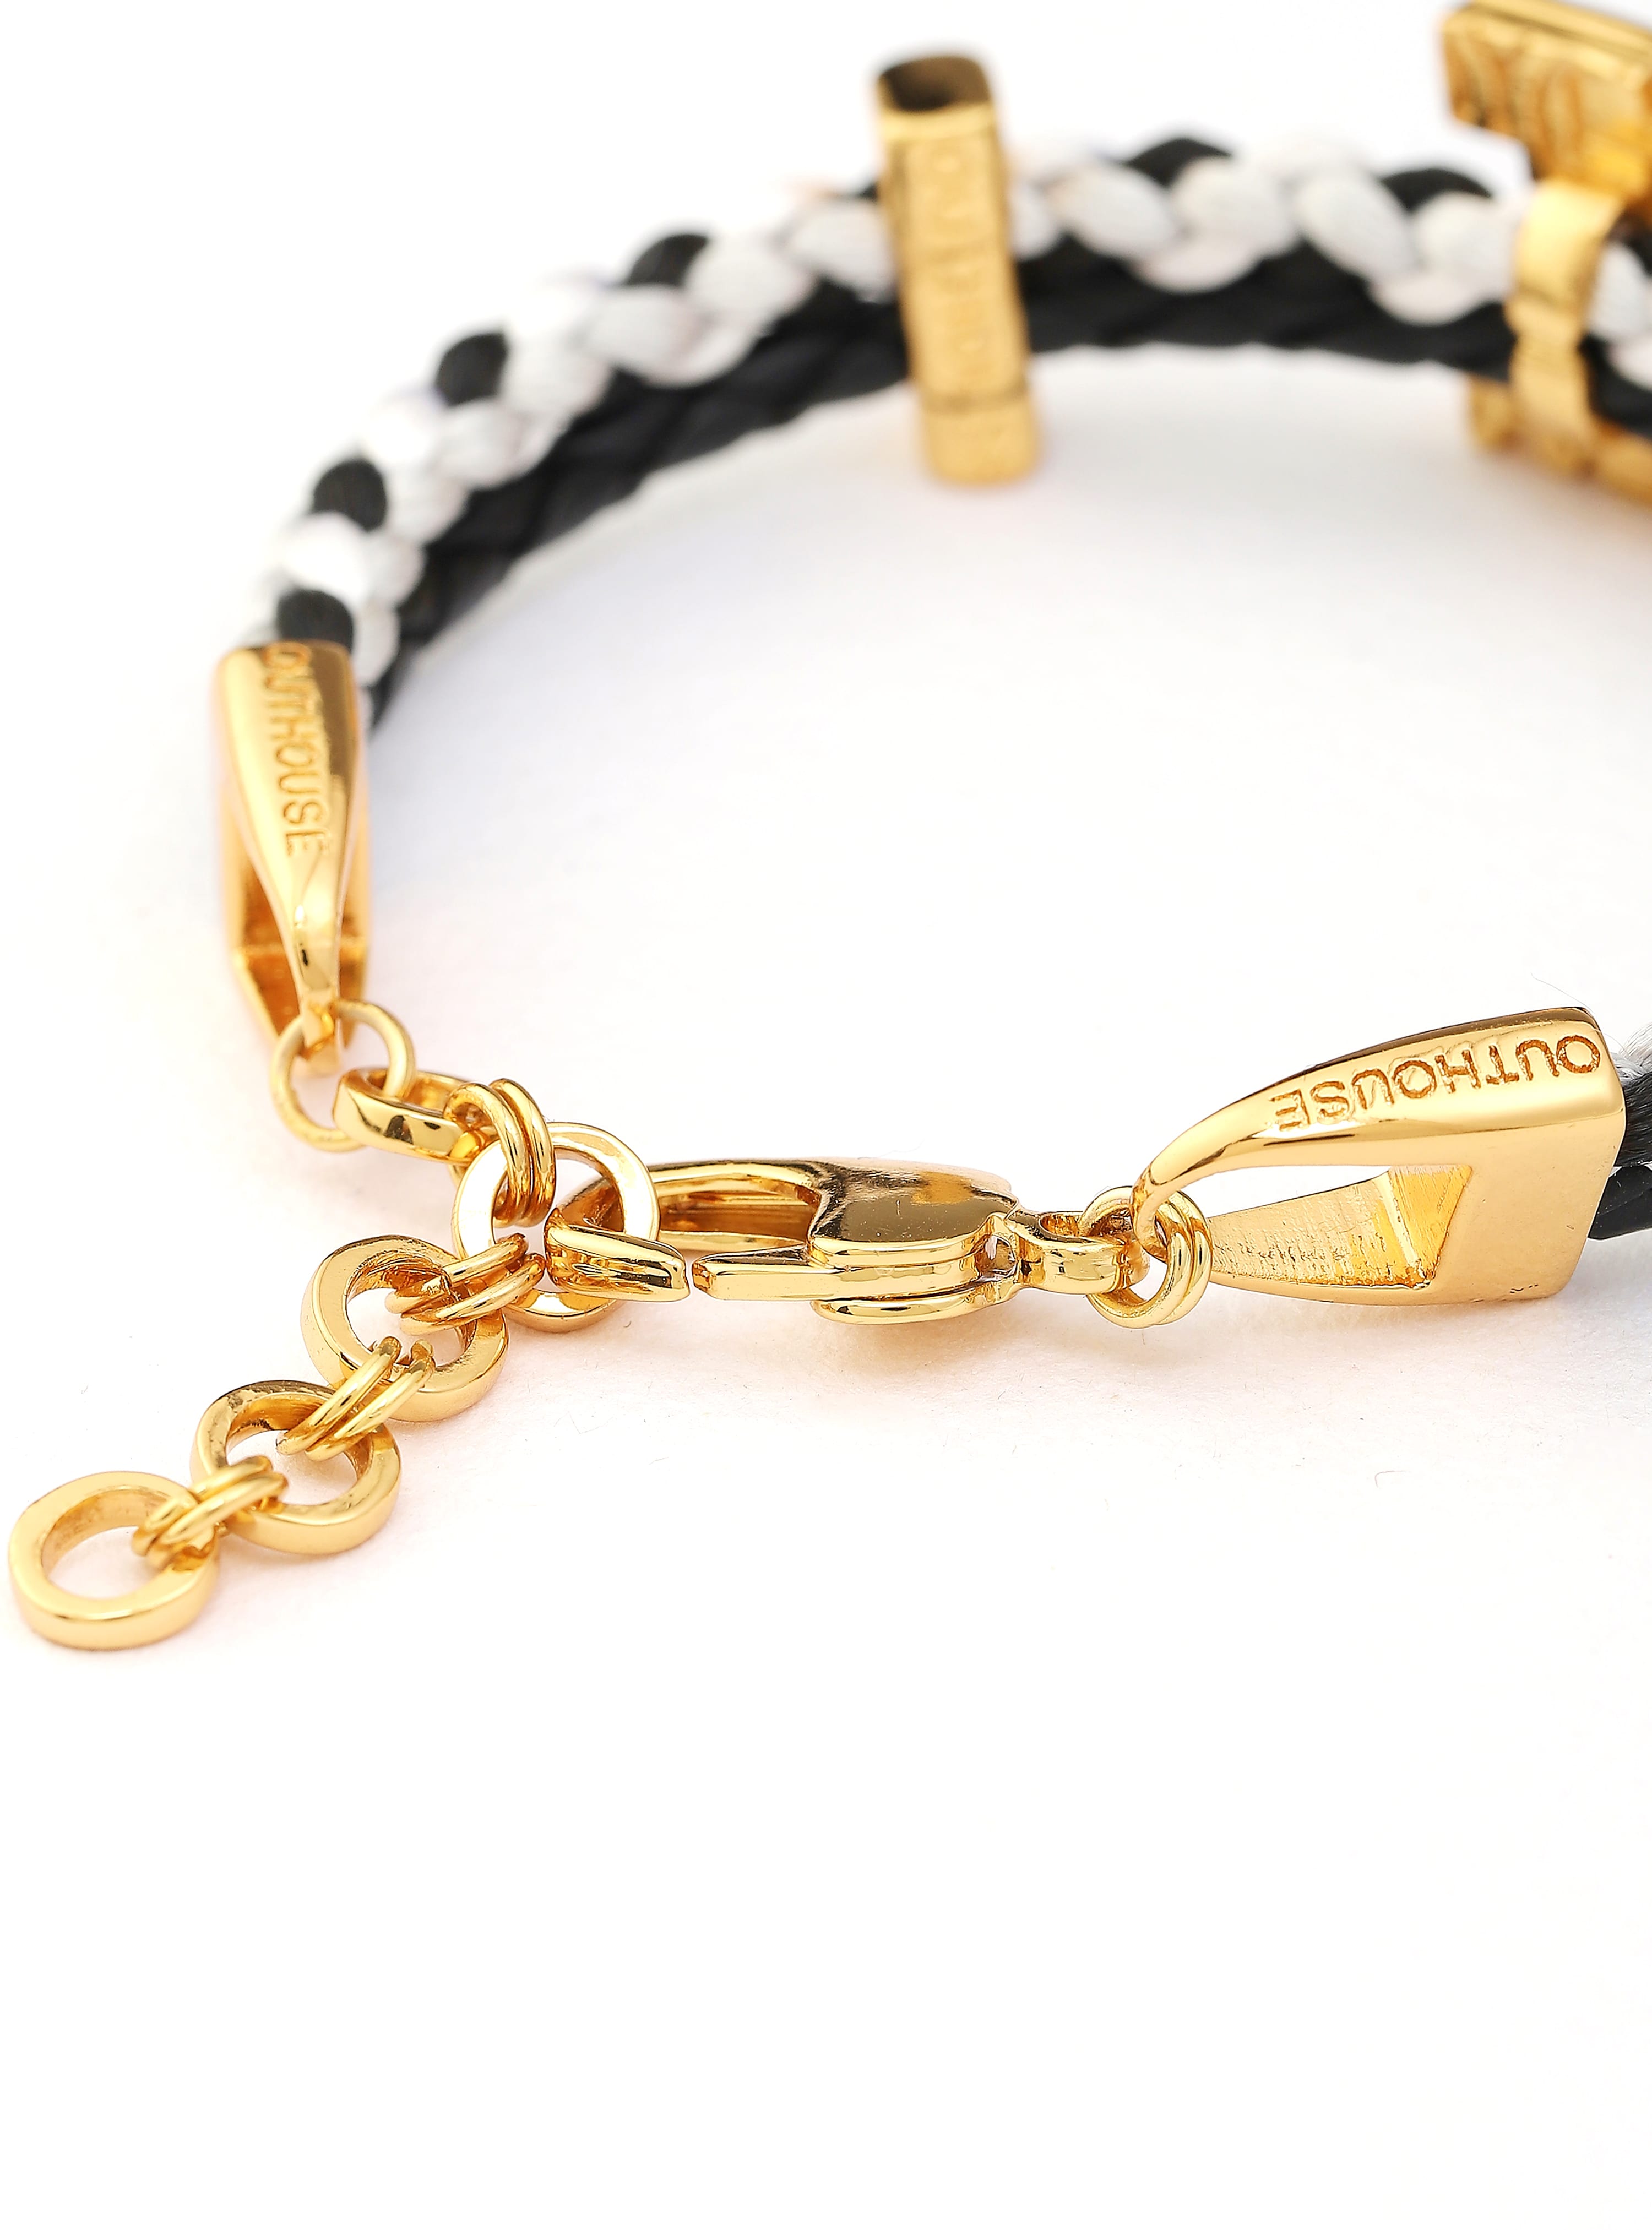 Home Team Gold Urban/Unisex Bracelet | Unisex bracelets, Gold, Bracelets